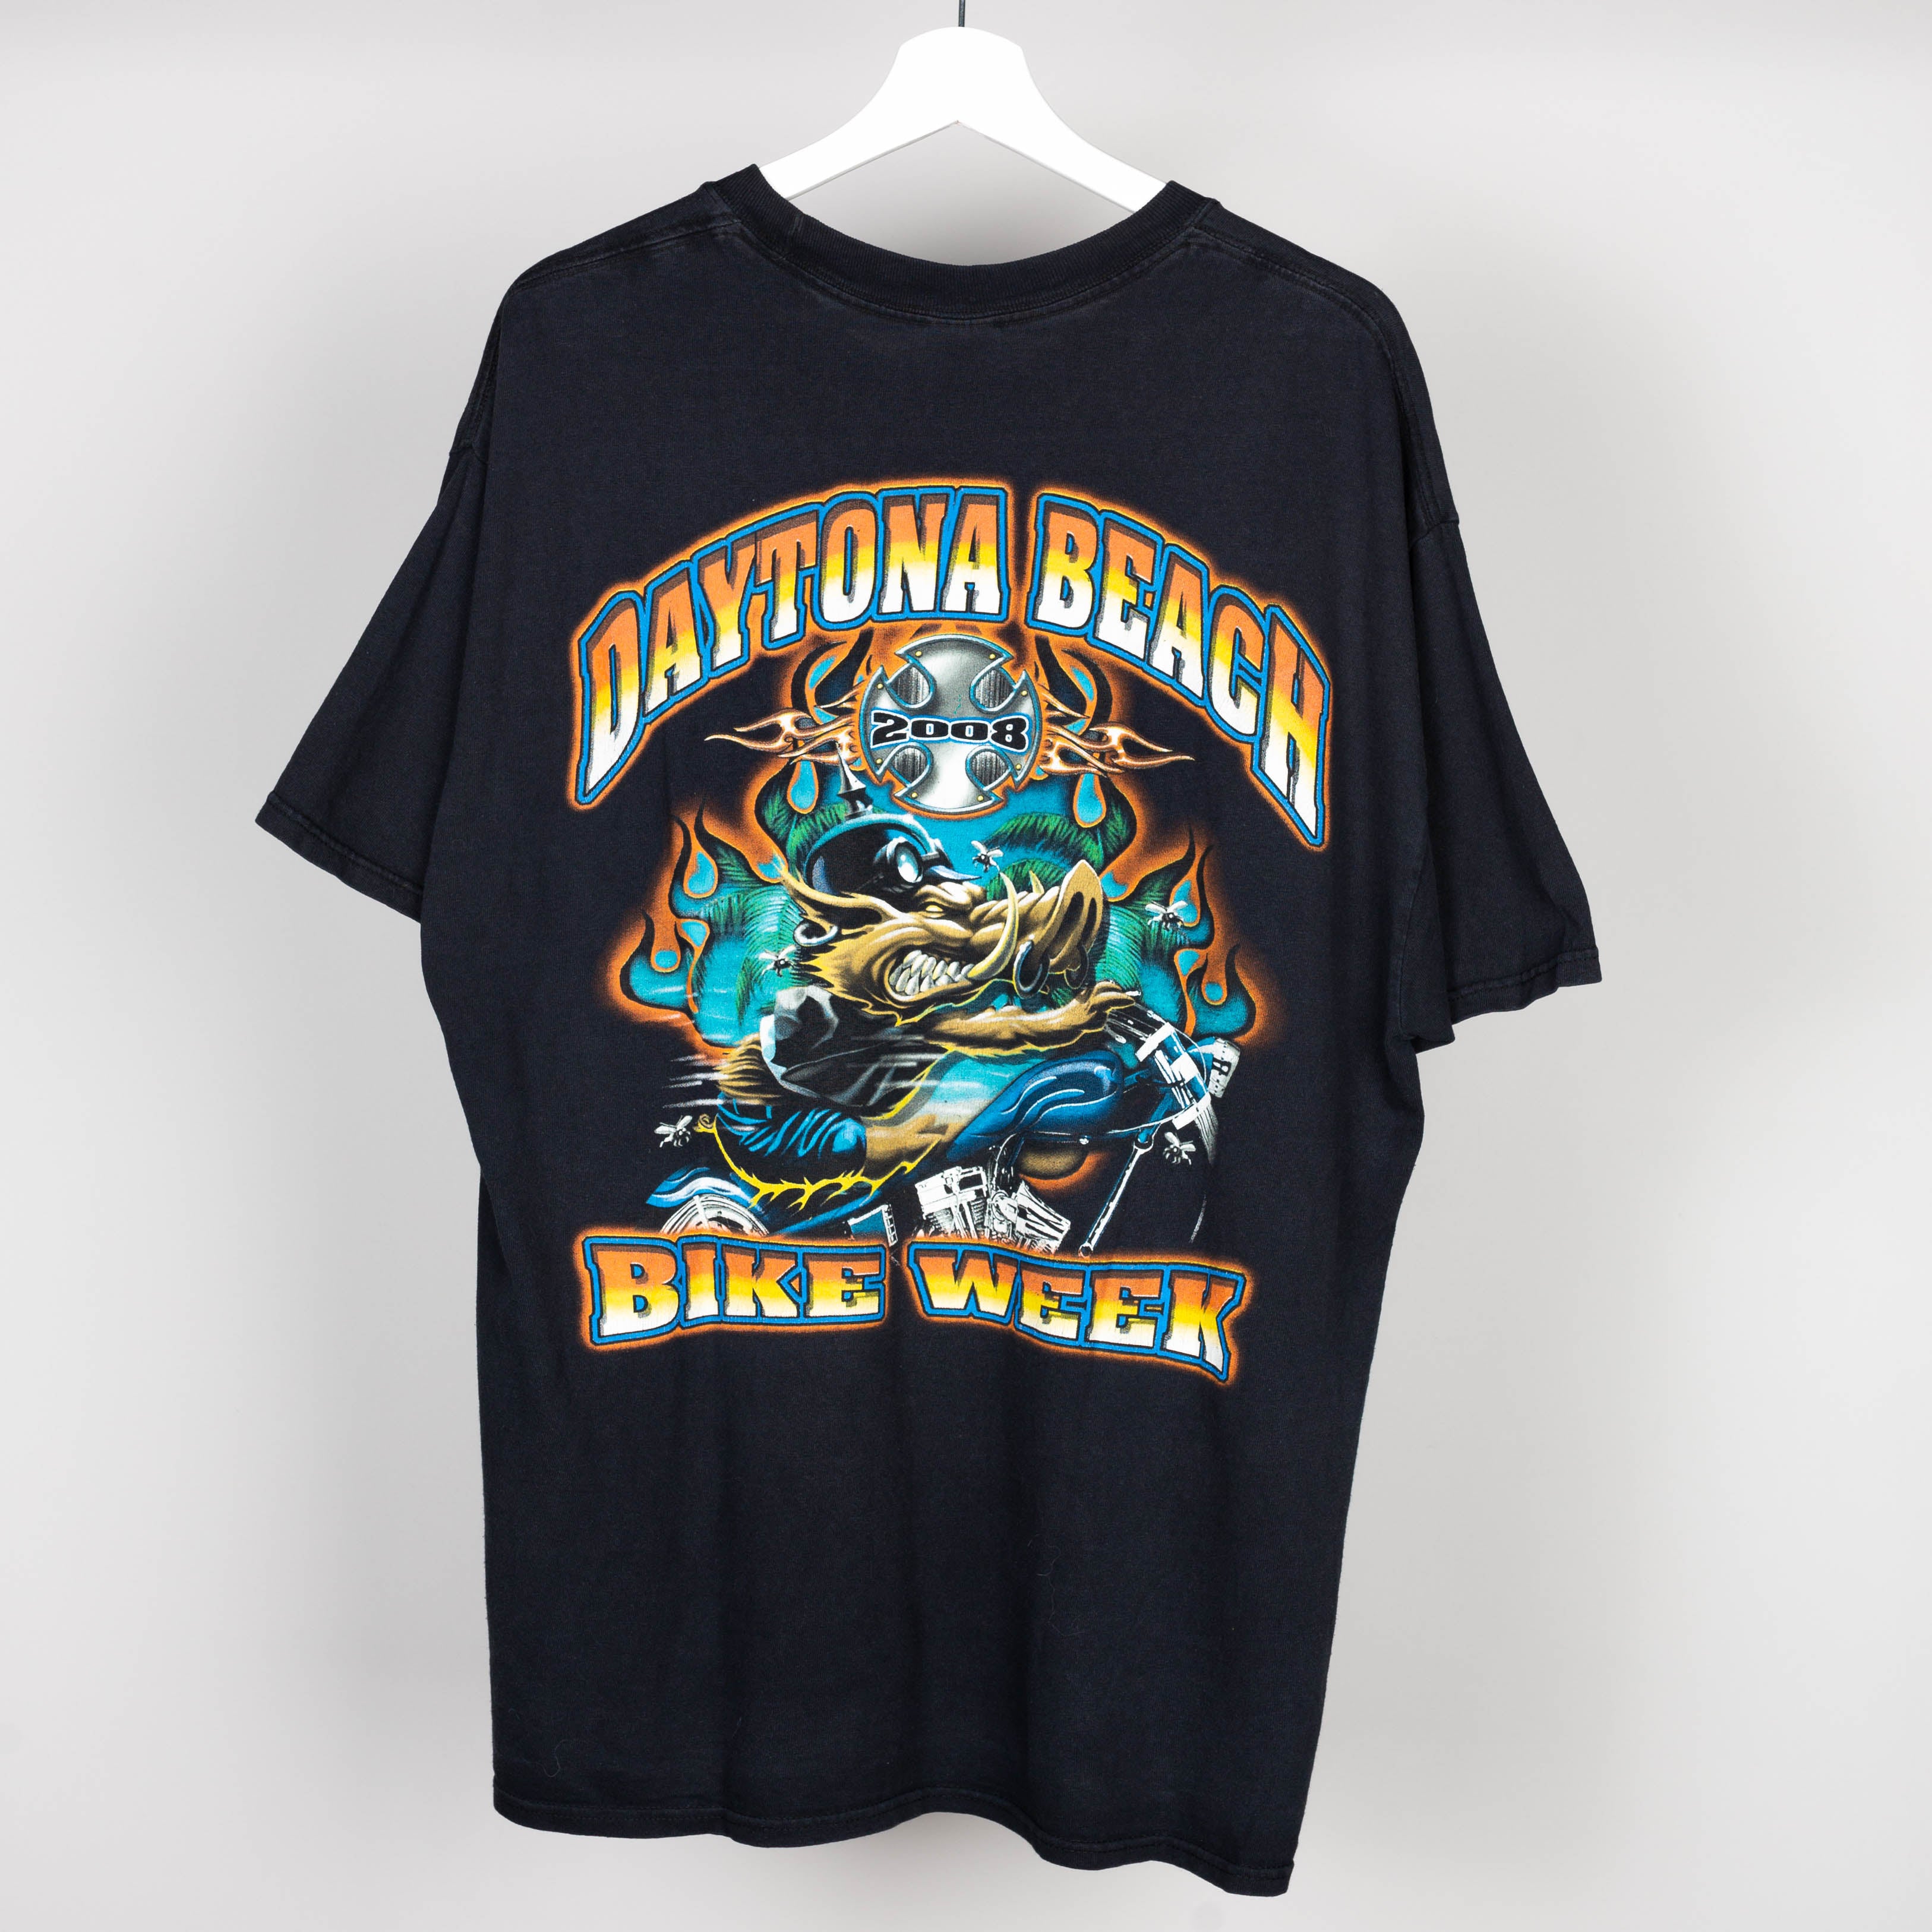 2008 Daytona Beach Bike Week T-Shirt Size XL